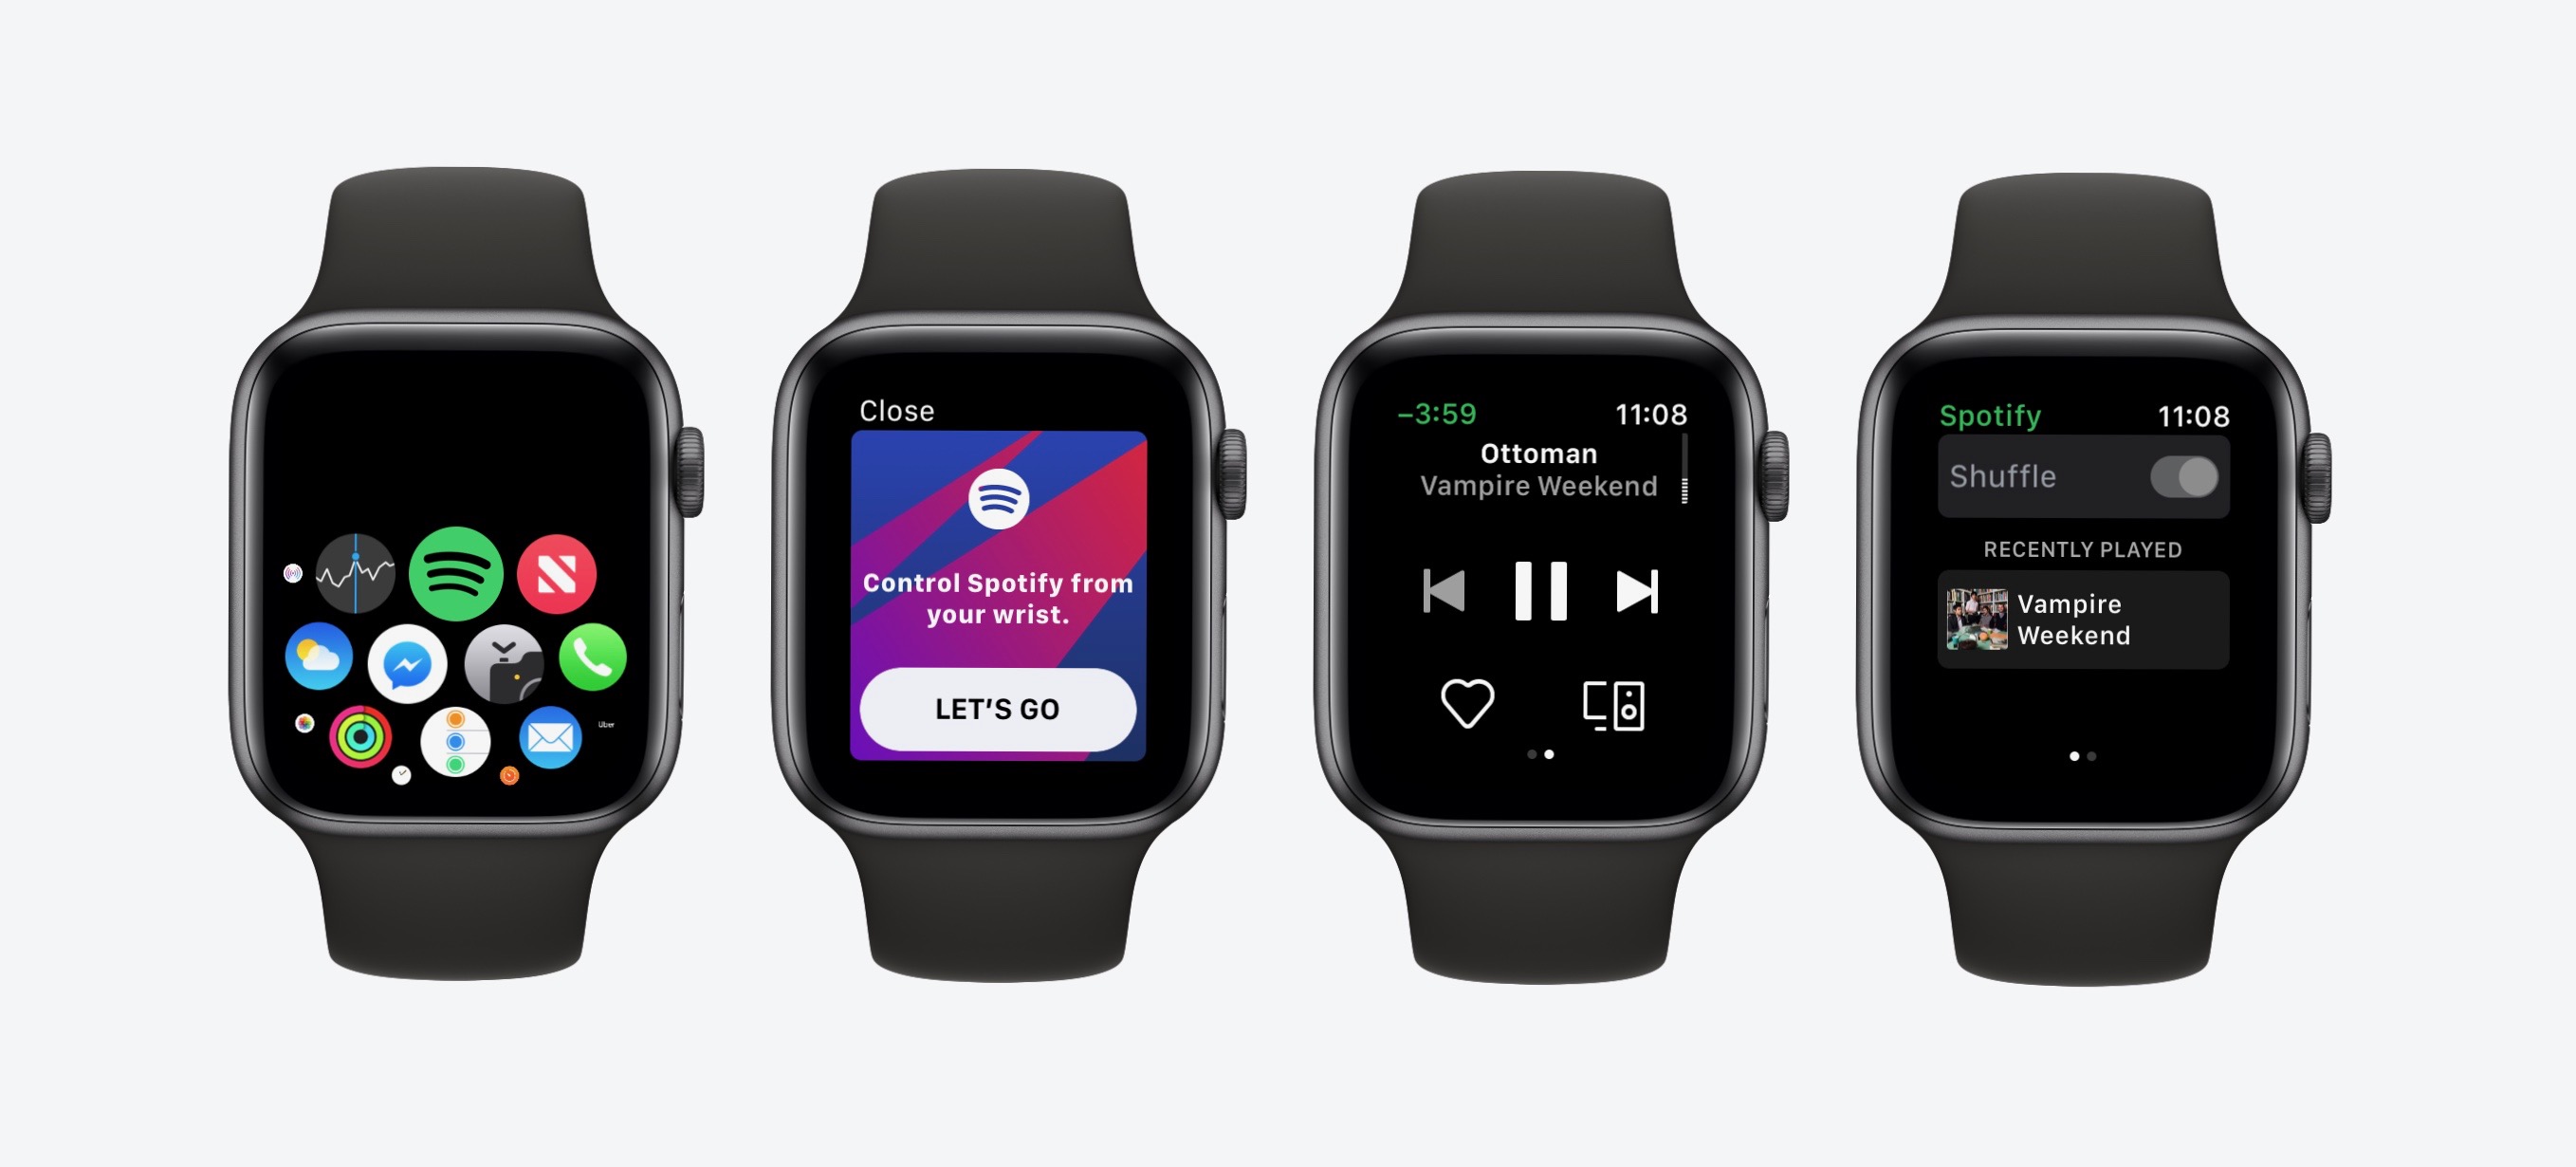 katalog ekstra redaktionelle How to get Spotify on Apple Watch - 9to5Mac